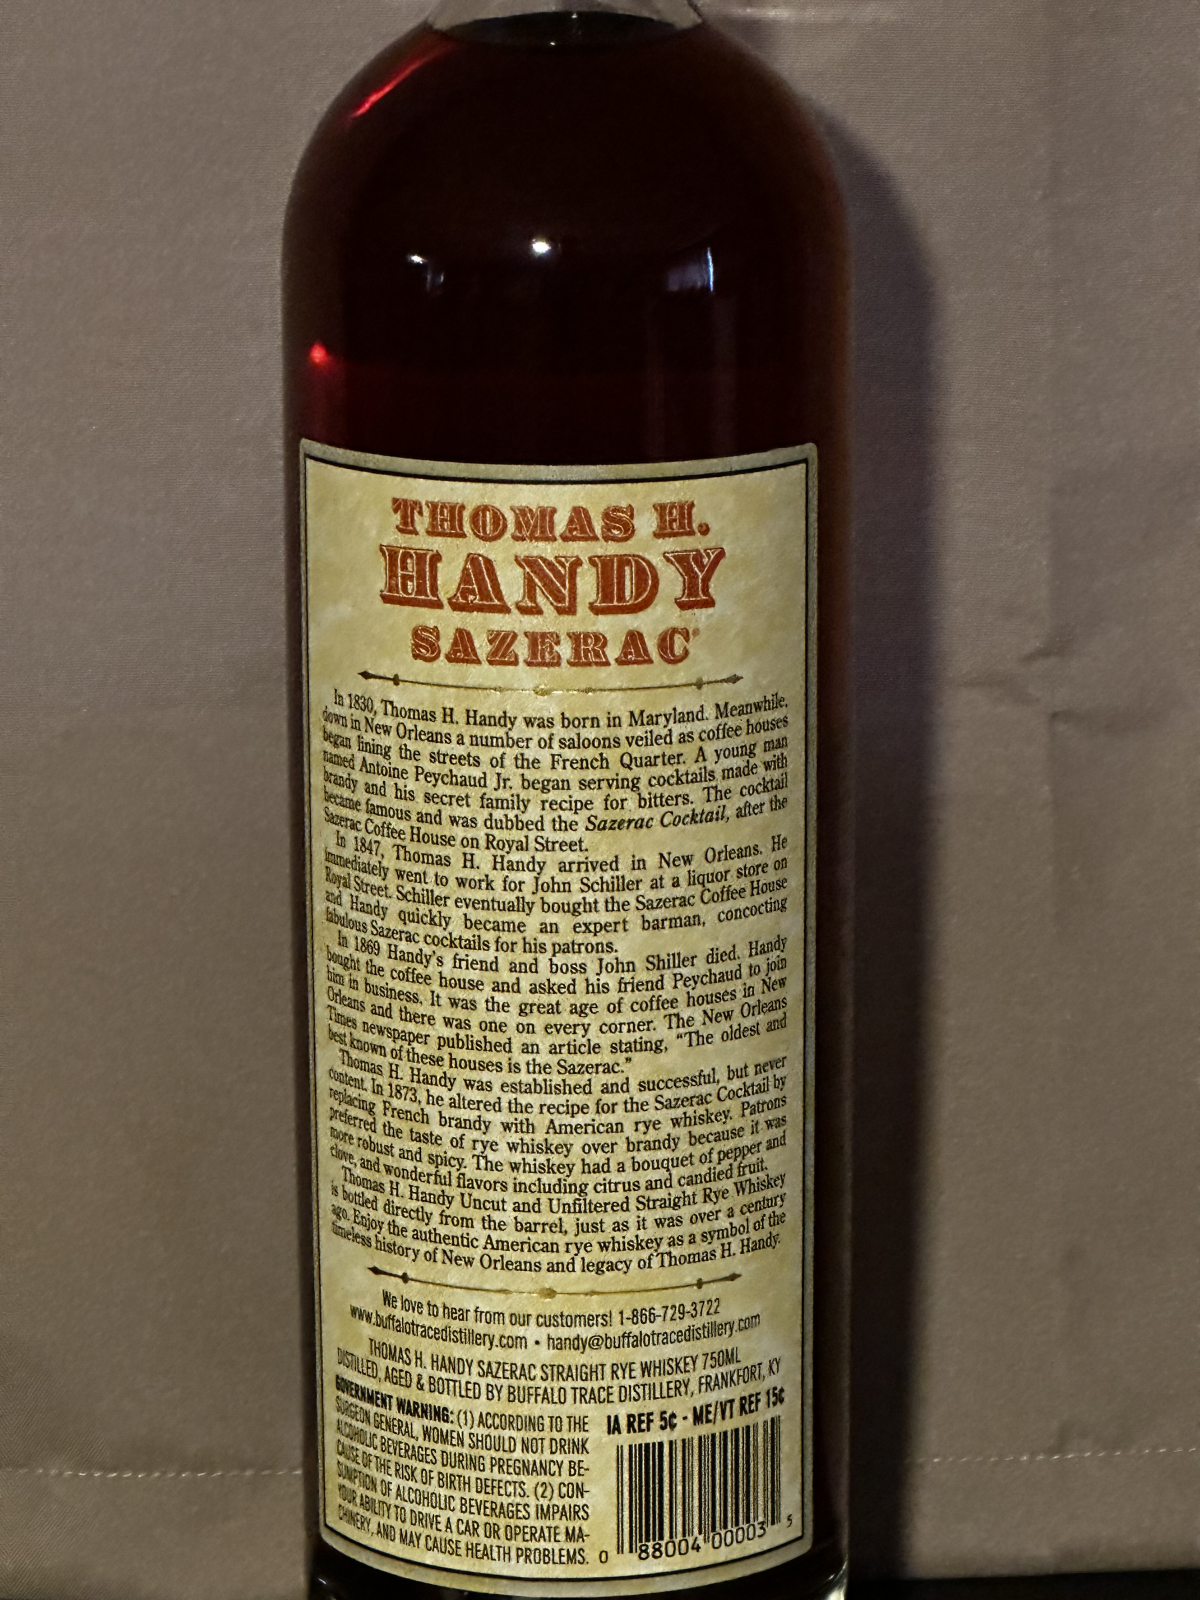 2022 Thomas H. Handy Sazerac Straight Rye Whiskey Review